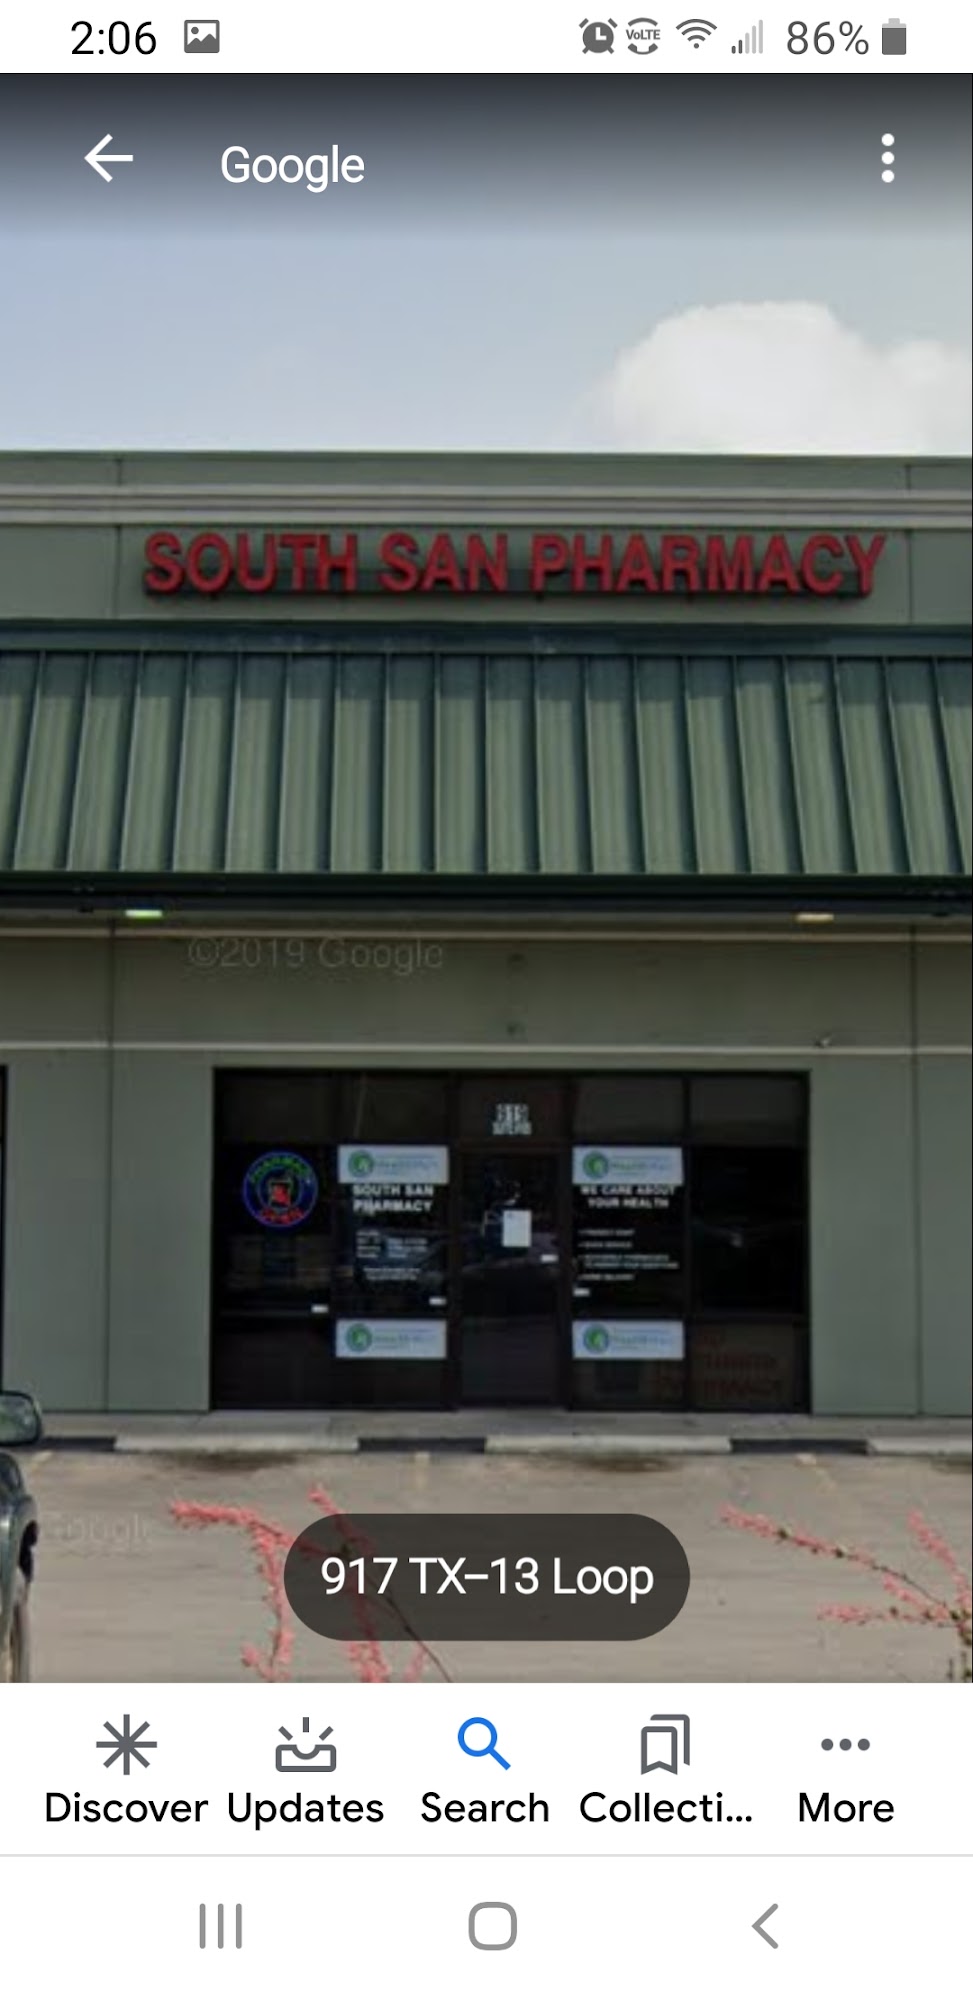 South San Pharmacy